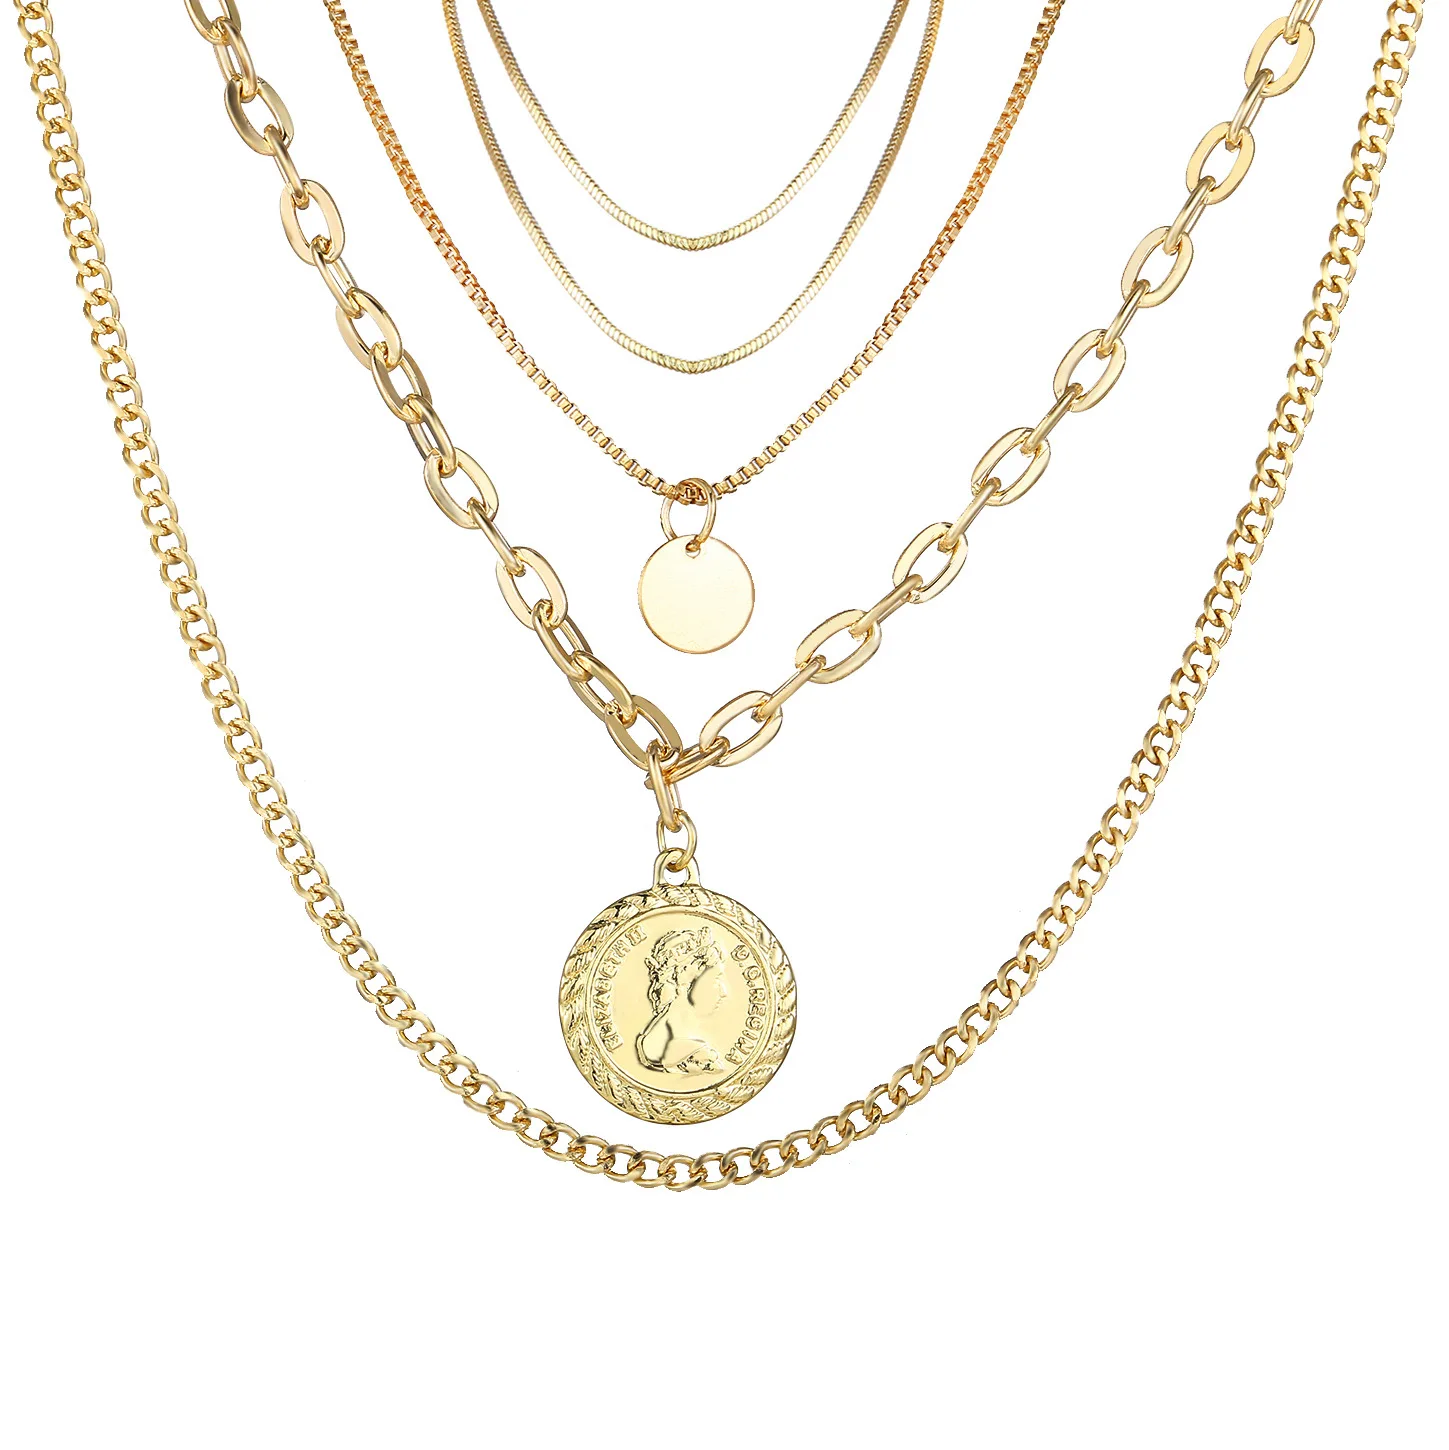 Circle necklace - Coin necklace - Gold coin necklace - multi